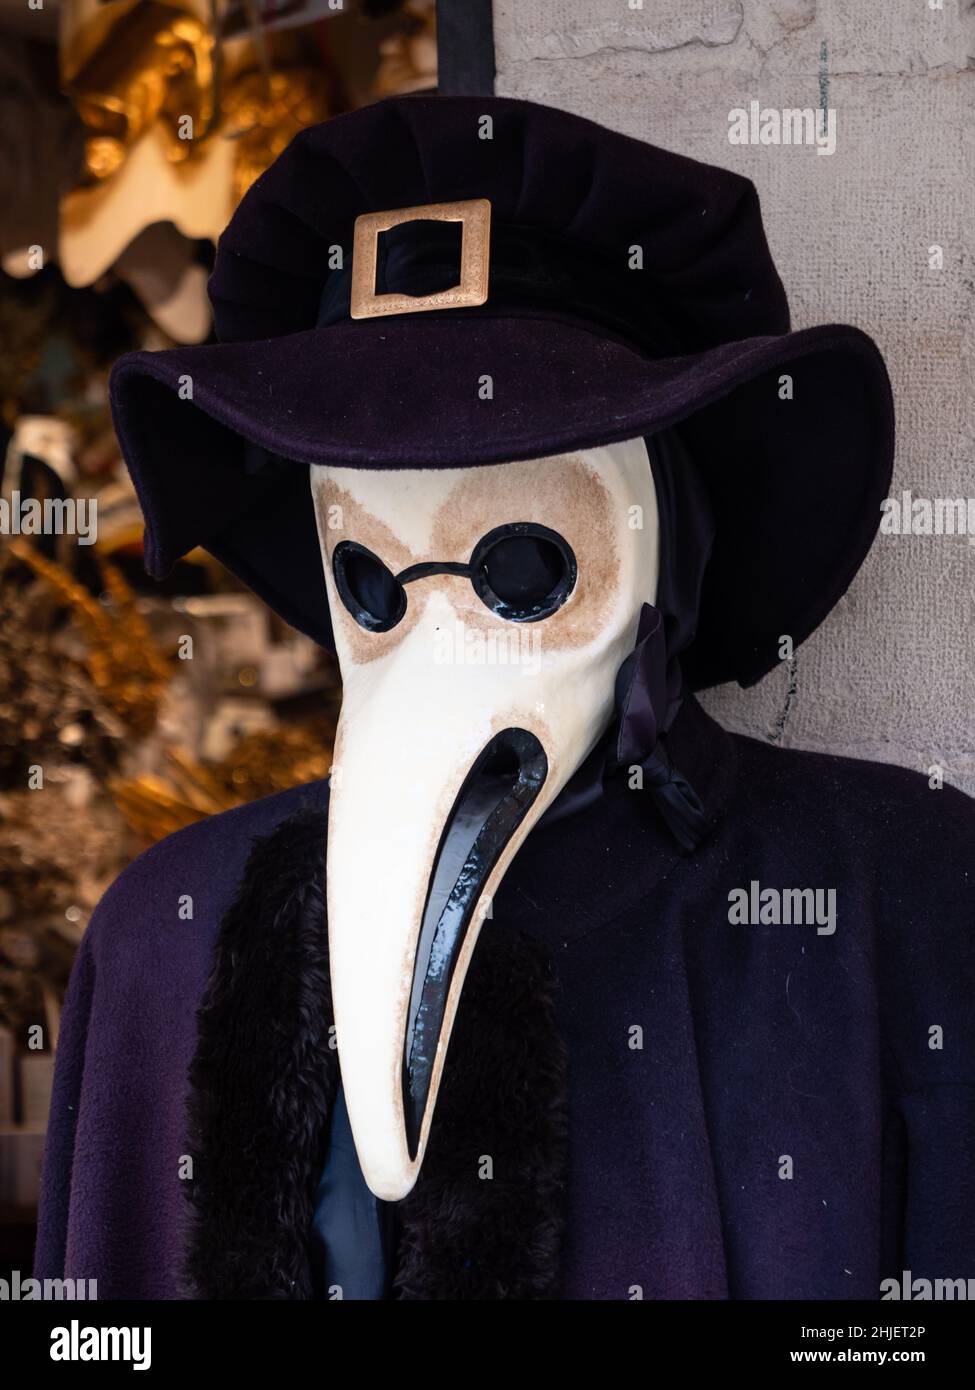 Plague mask venice -Fotos und -Bildmaterial in hoher Auflösung – Alamy